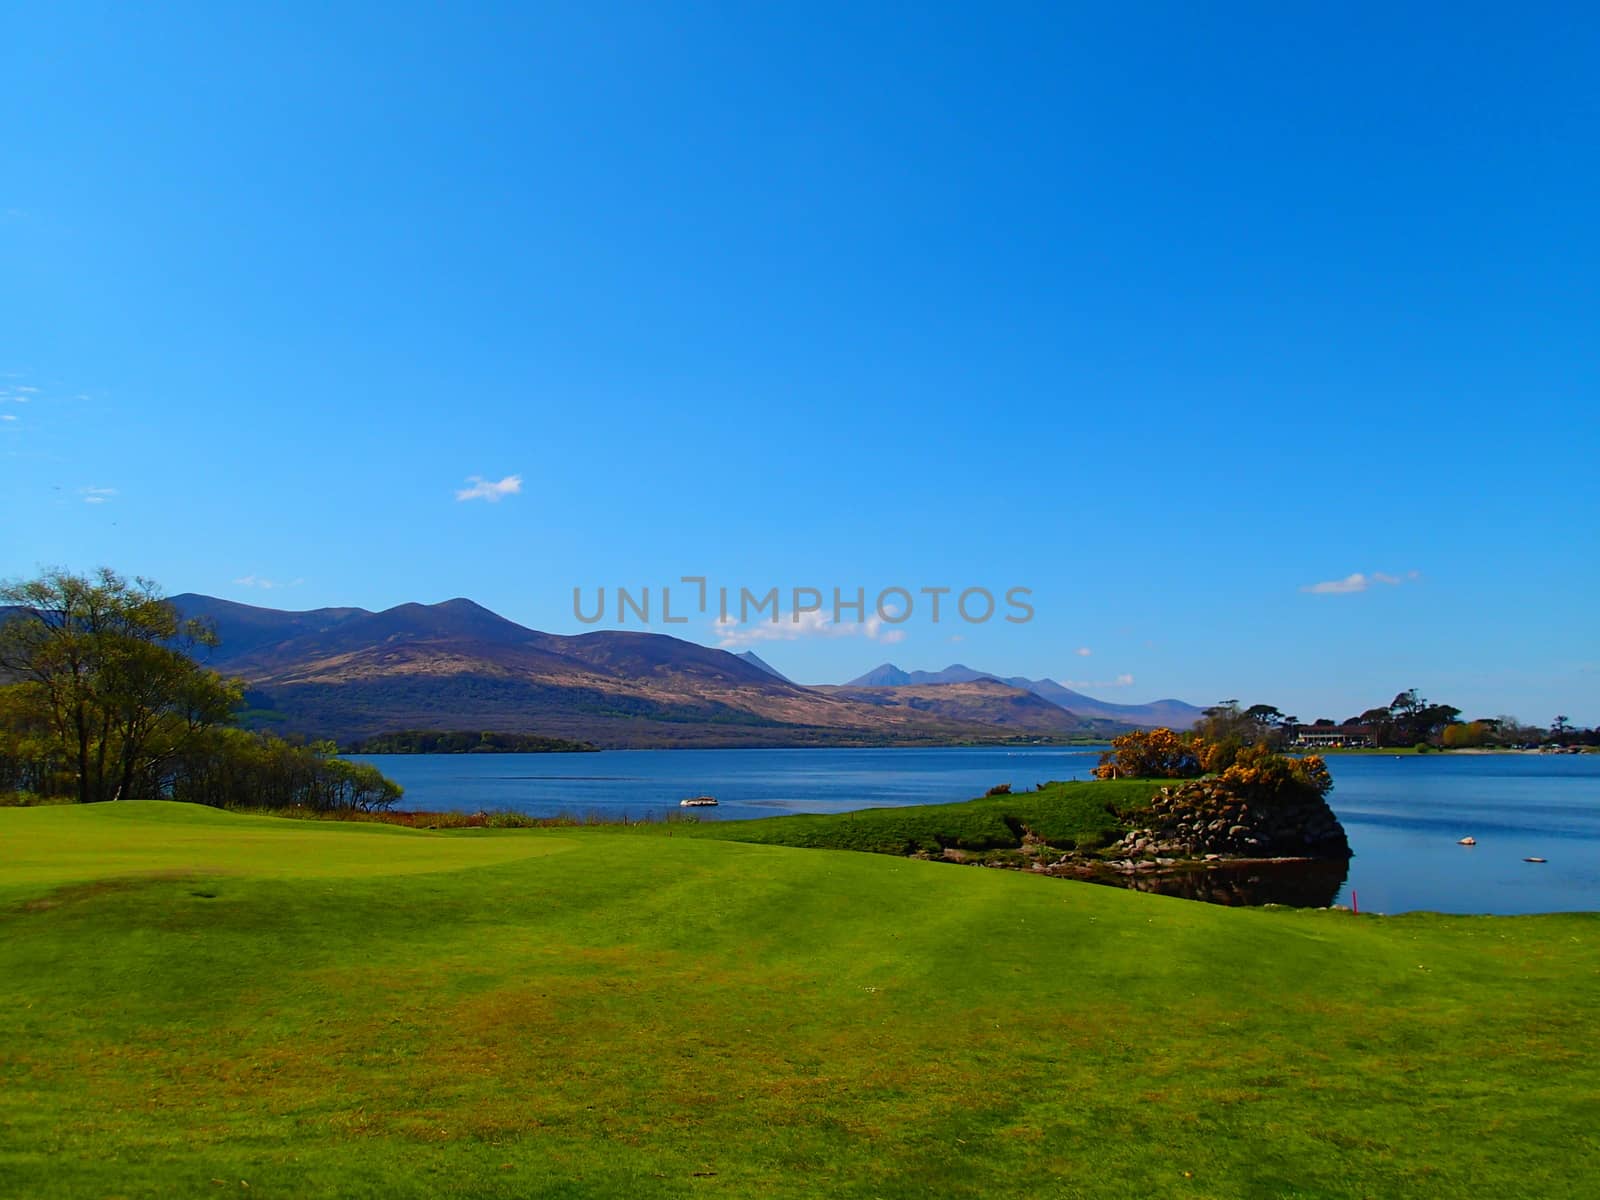 Golf course in Killarney Ireland by antenacarnidlo